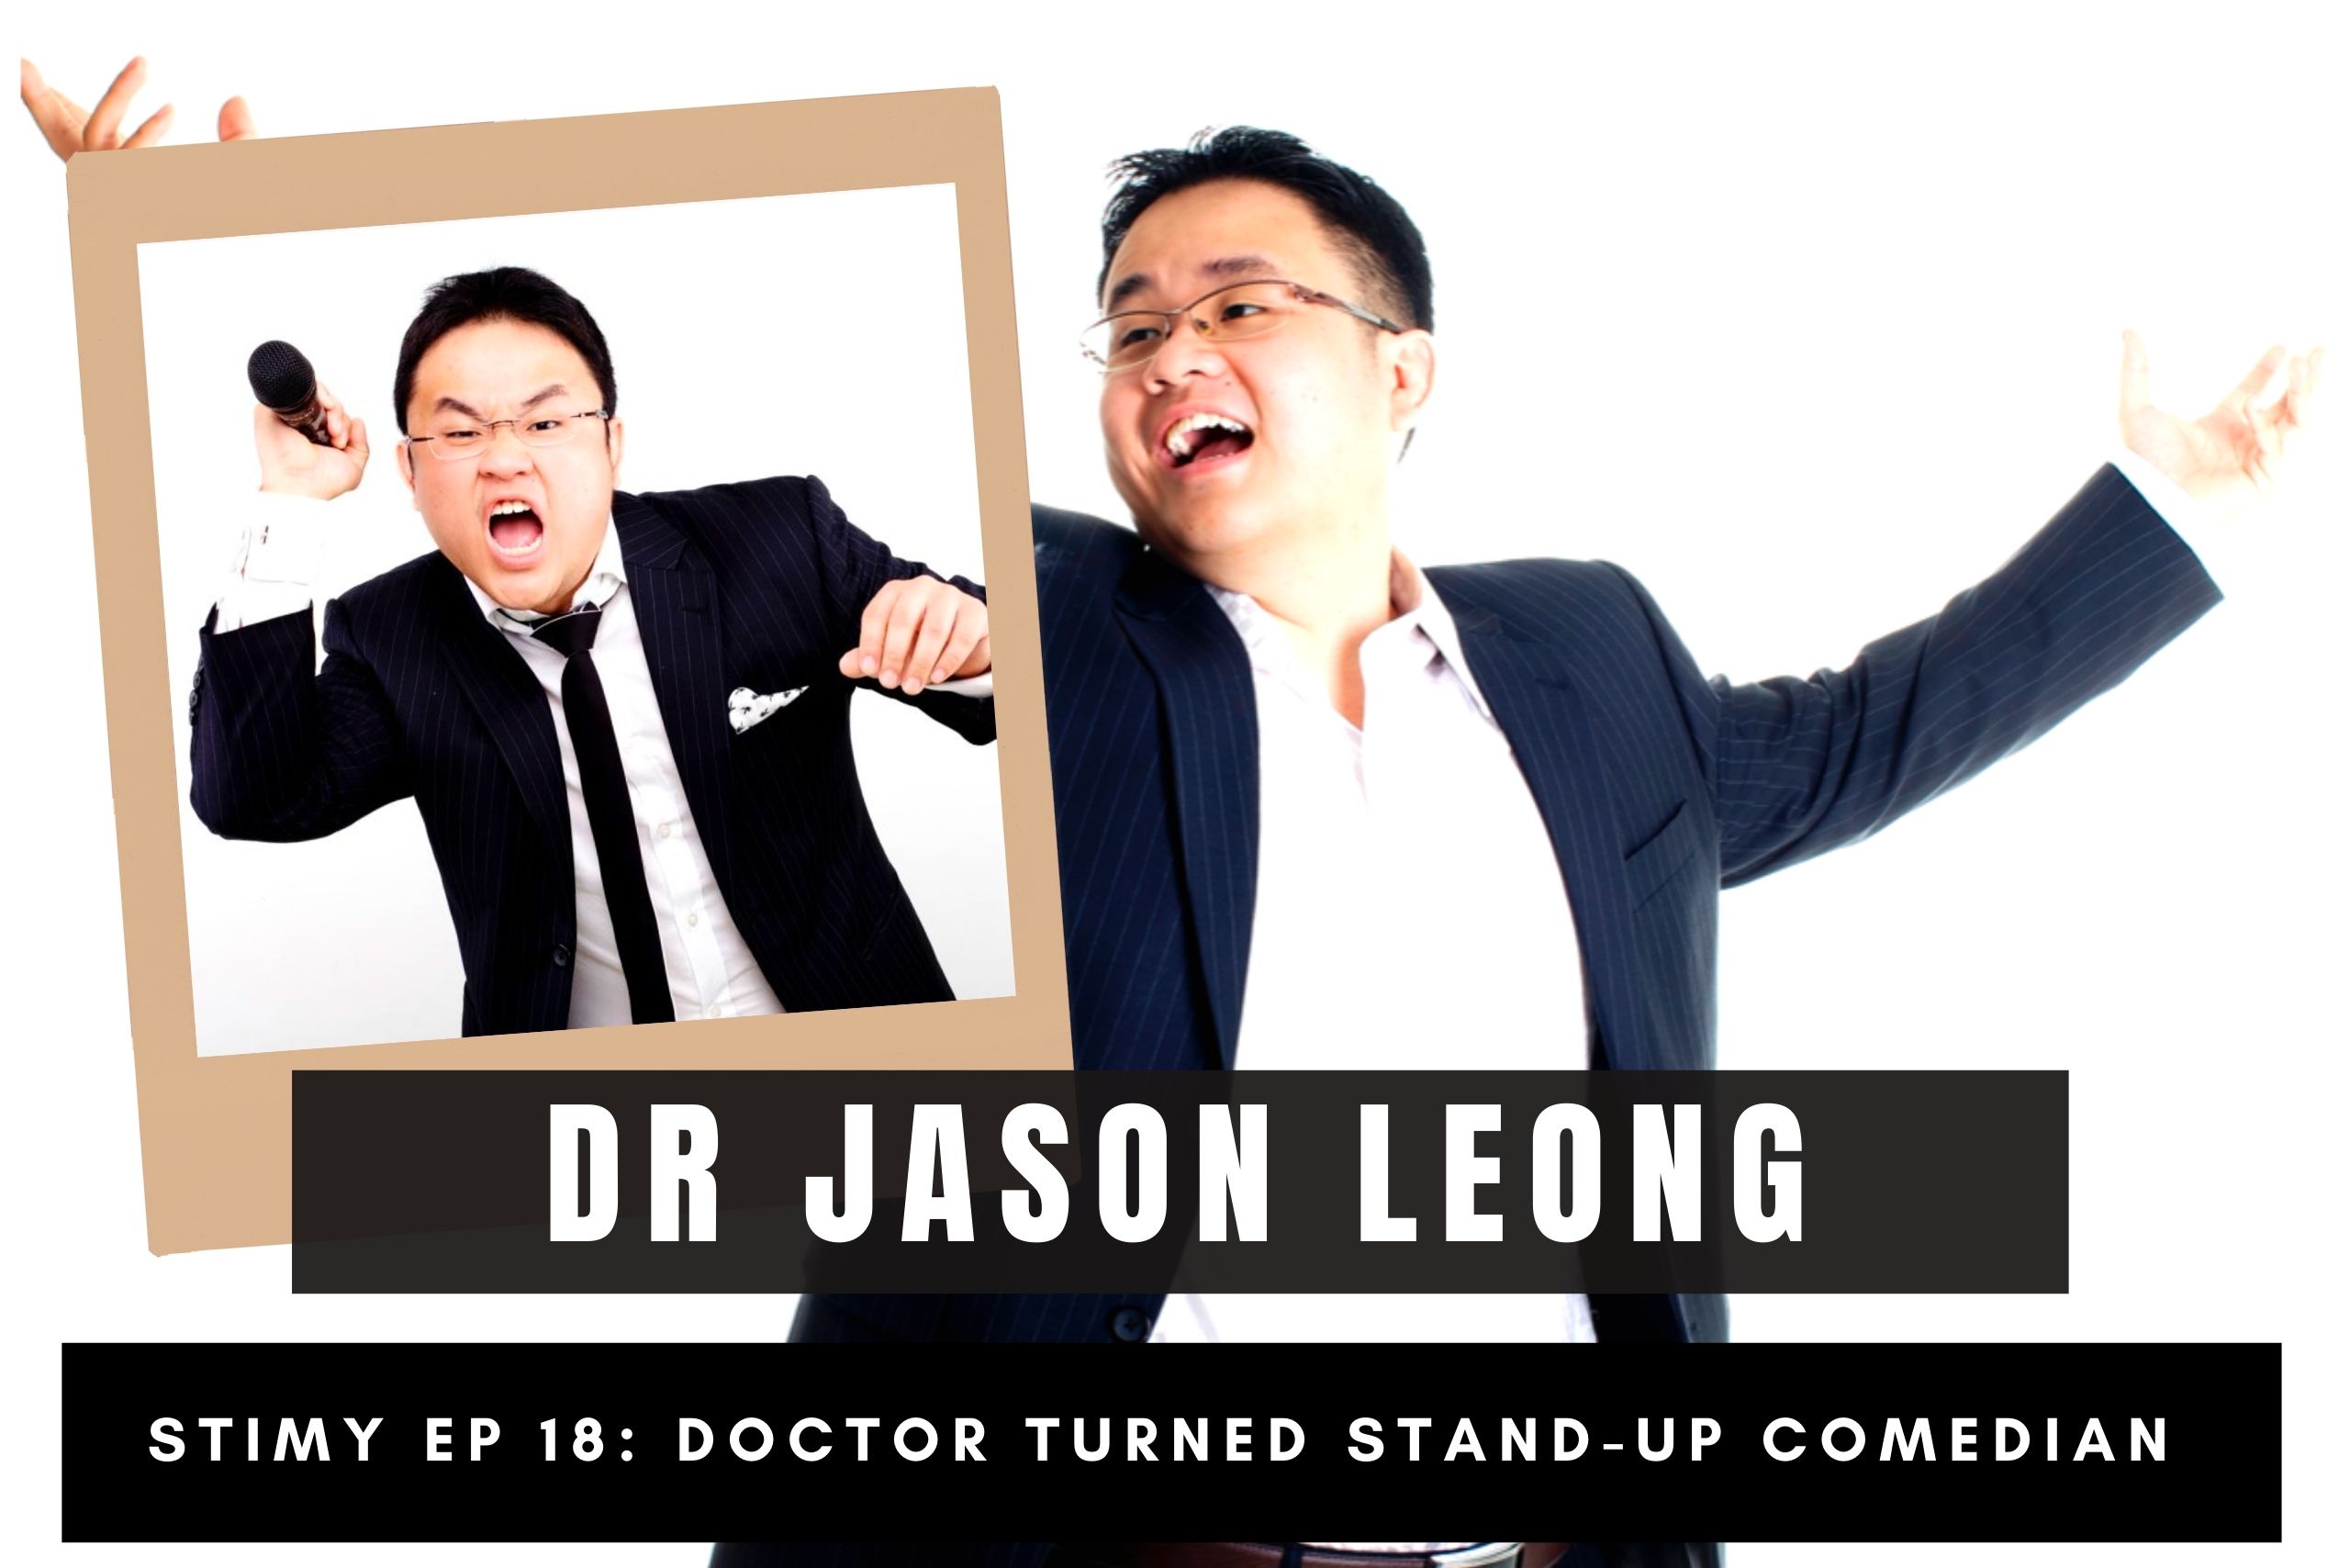 Jason leong comedian